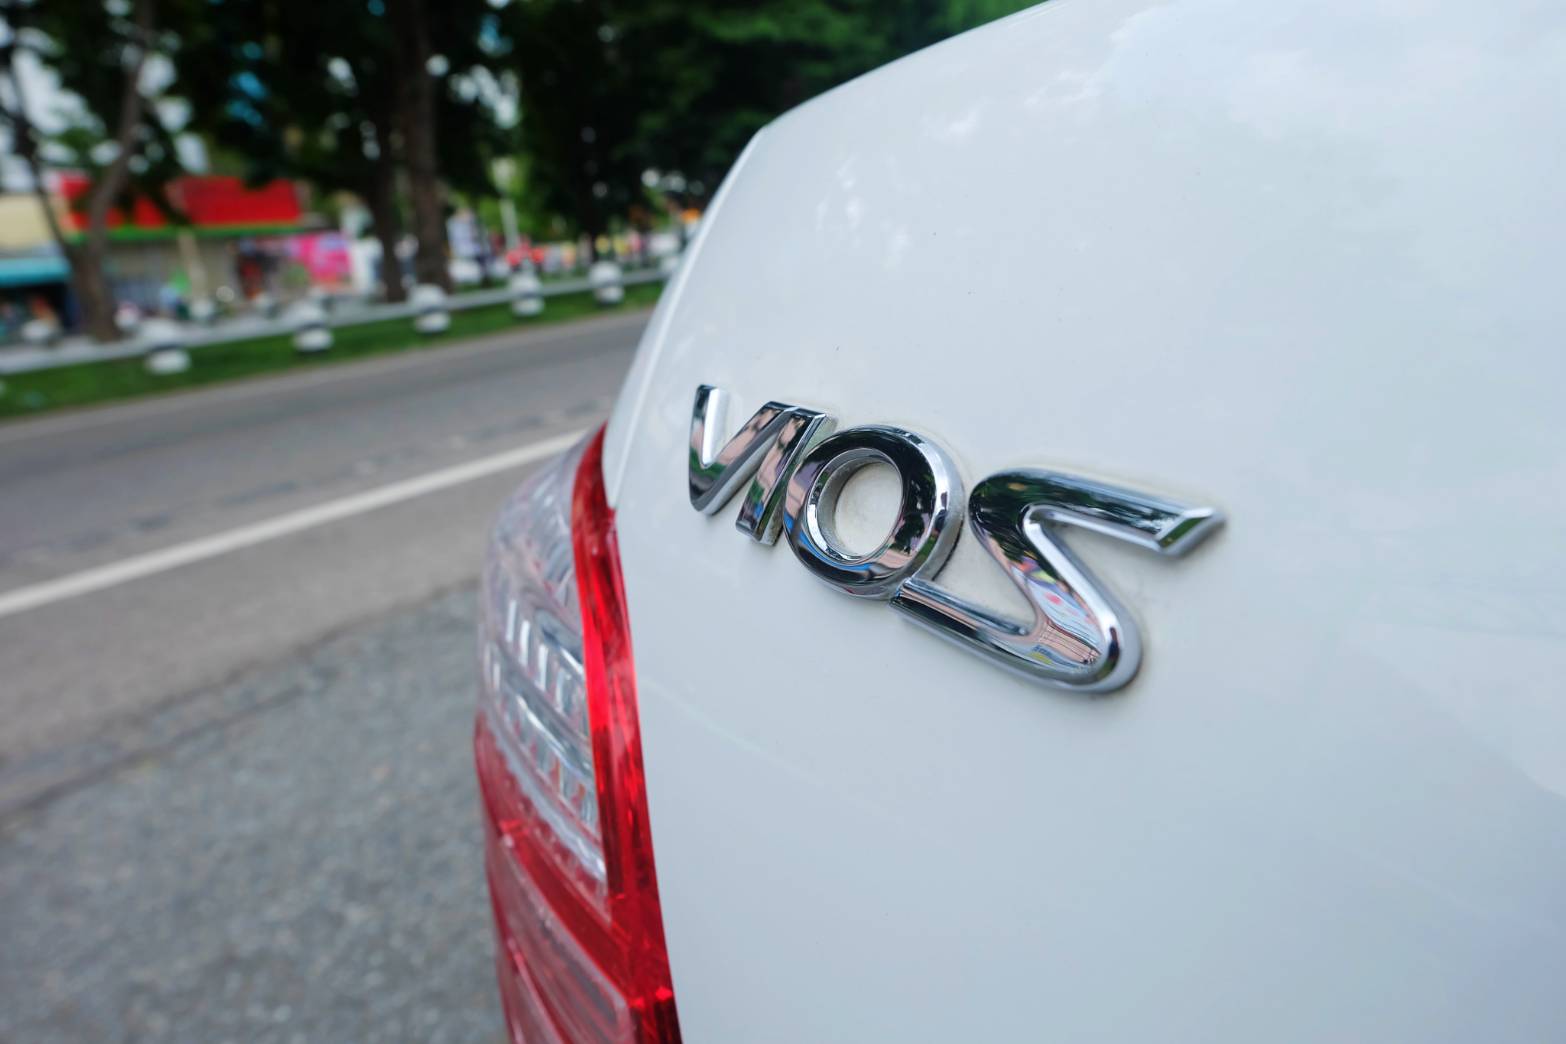 2012 Toyota Vios สีขาว